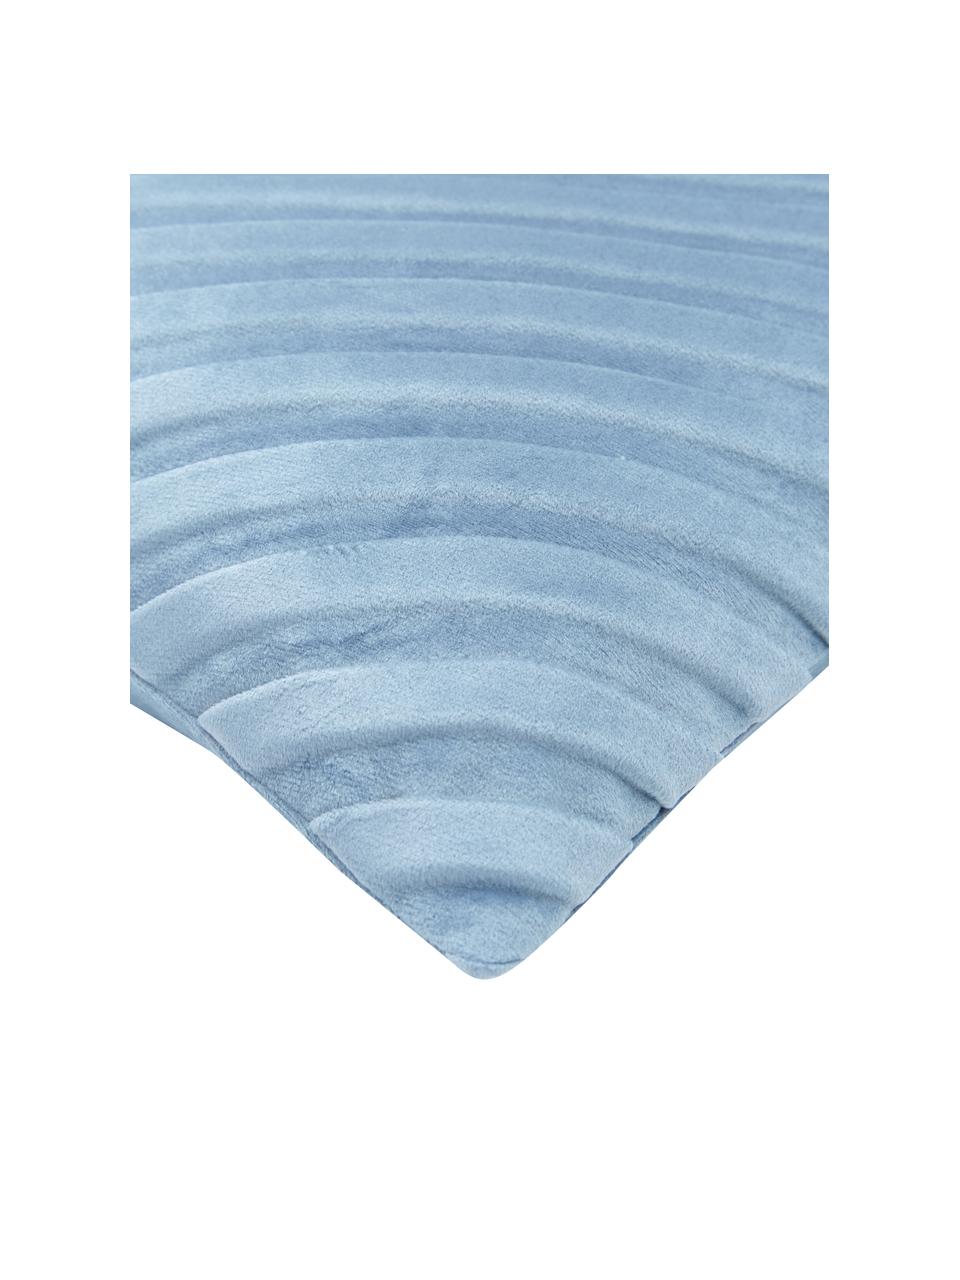 Federa arredo strutturata in velluto azzurro Lucie, 100% velluto (poliestere), Blu, Larg. 45 x Lung. 45 cm